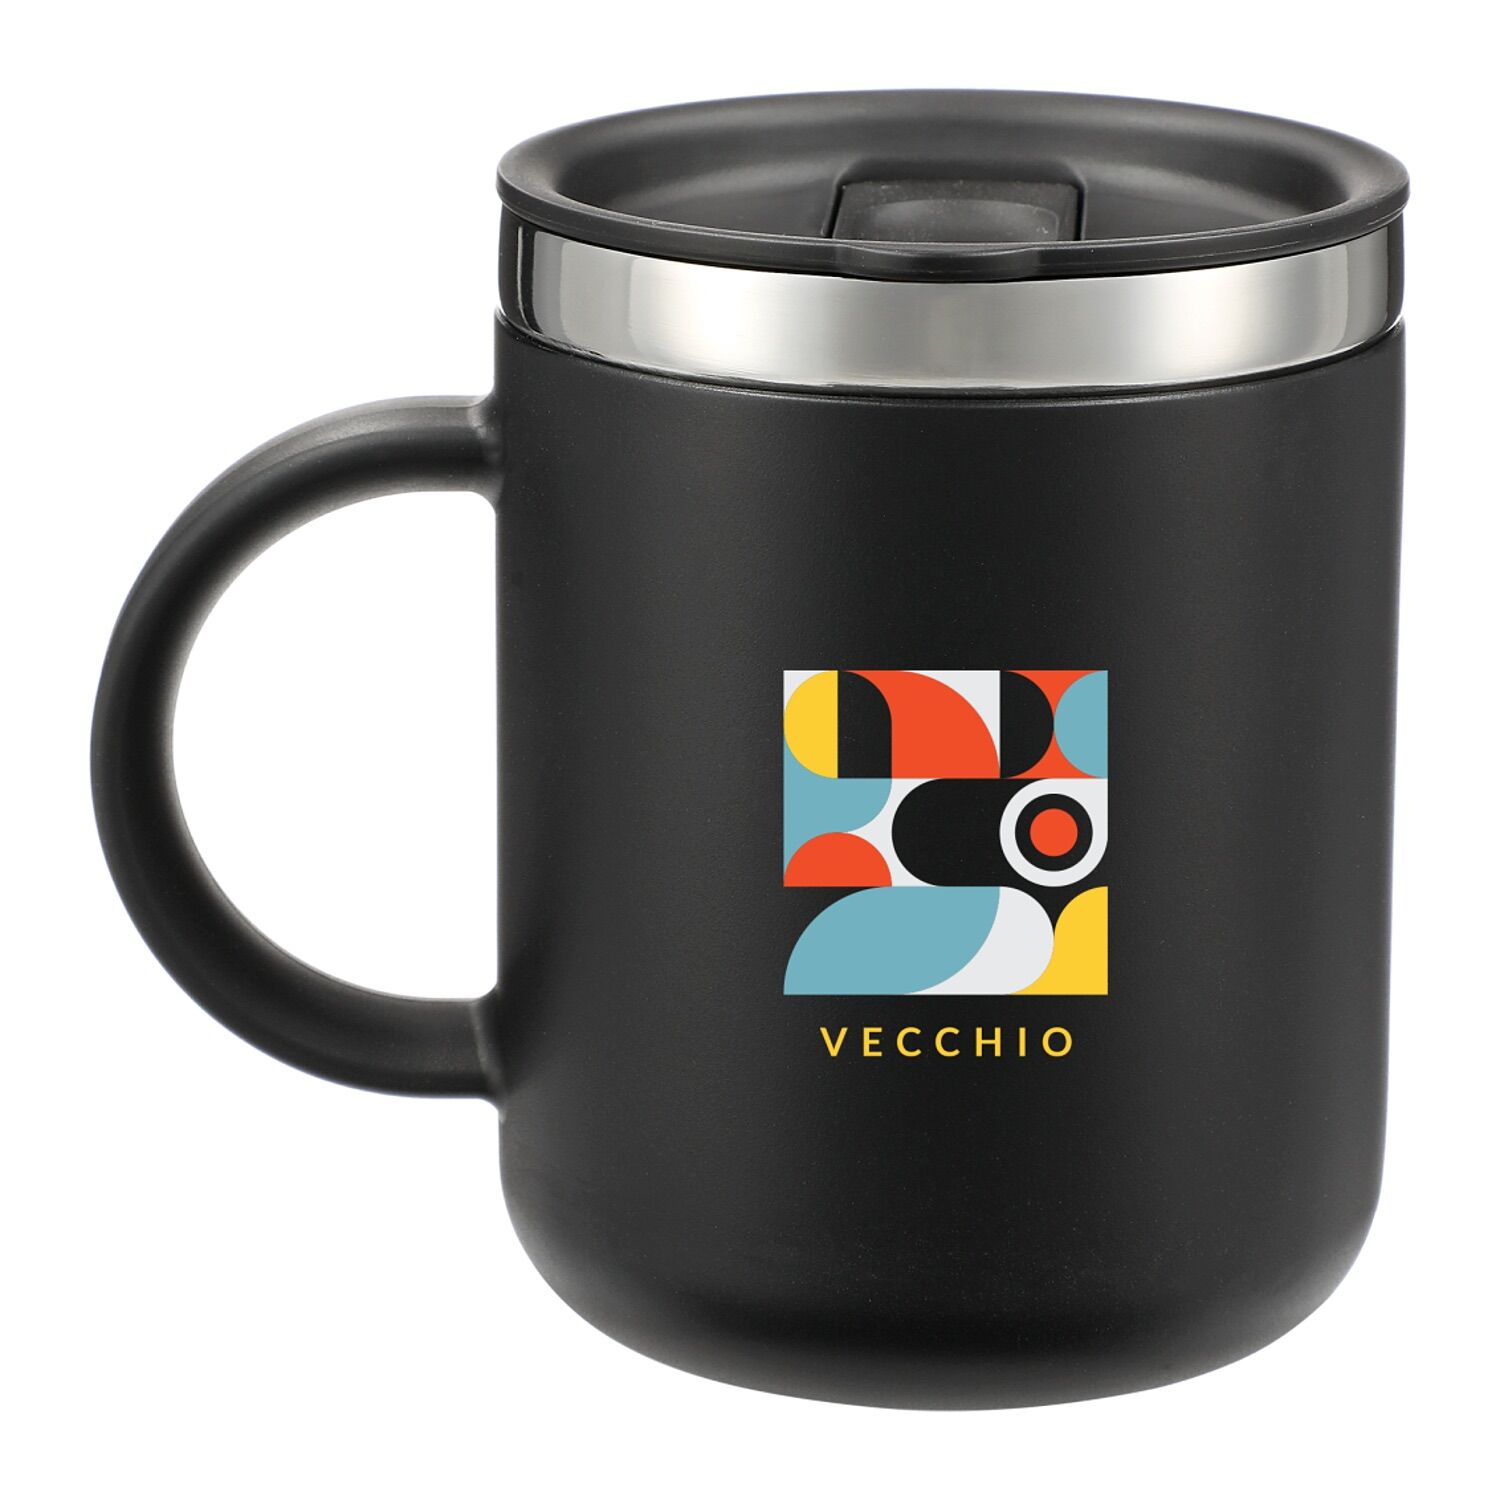  Hydro Flask 12 oz Travel Coffee Mug - Stainless Steel